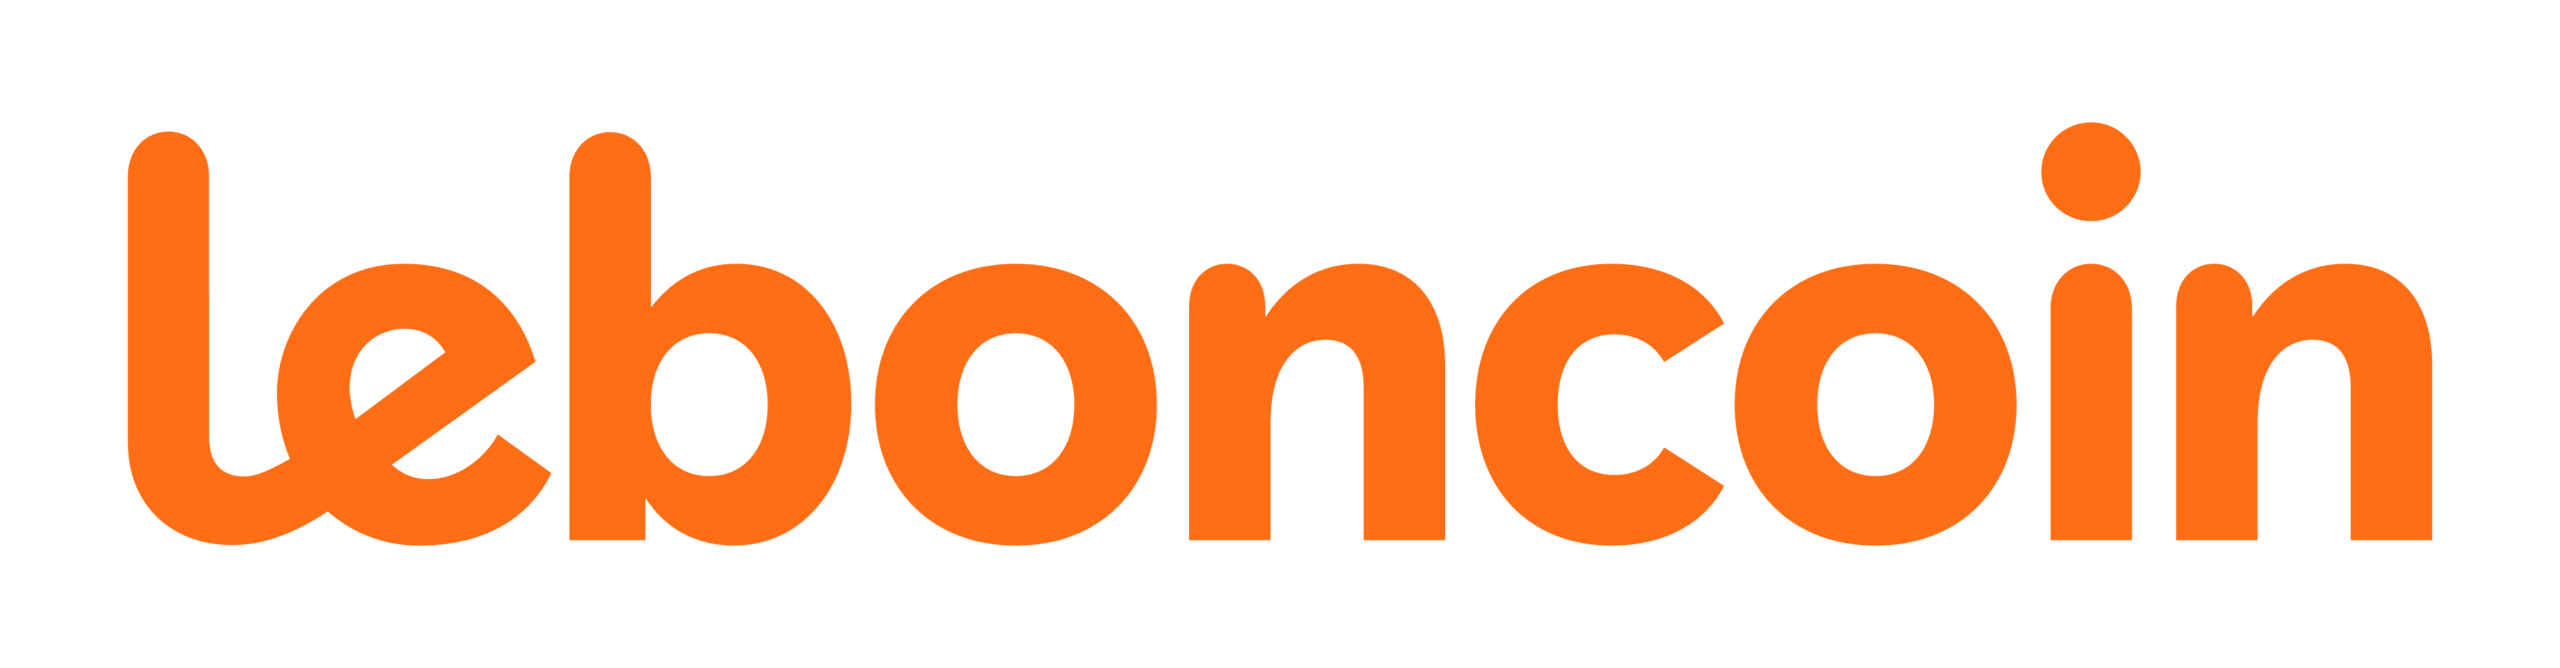 logo leboncoin pour l'offre tv segmentee tv accesscible